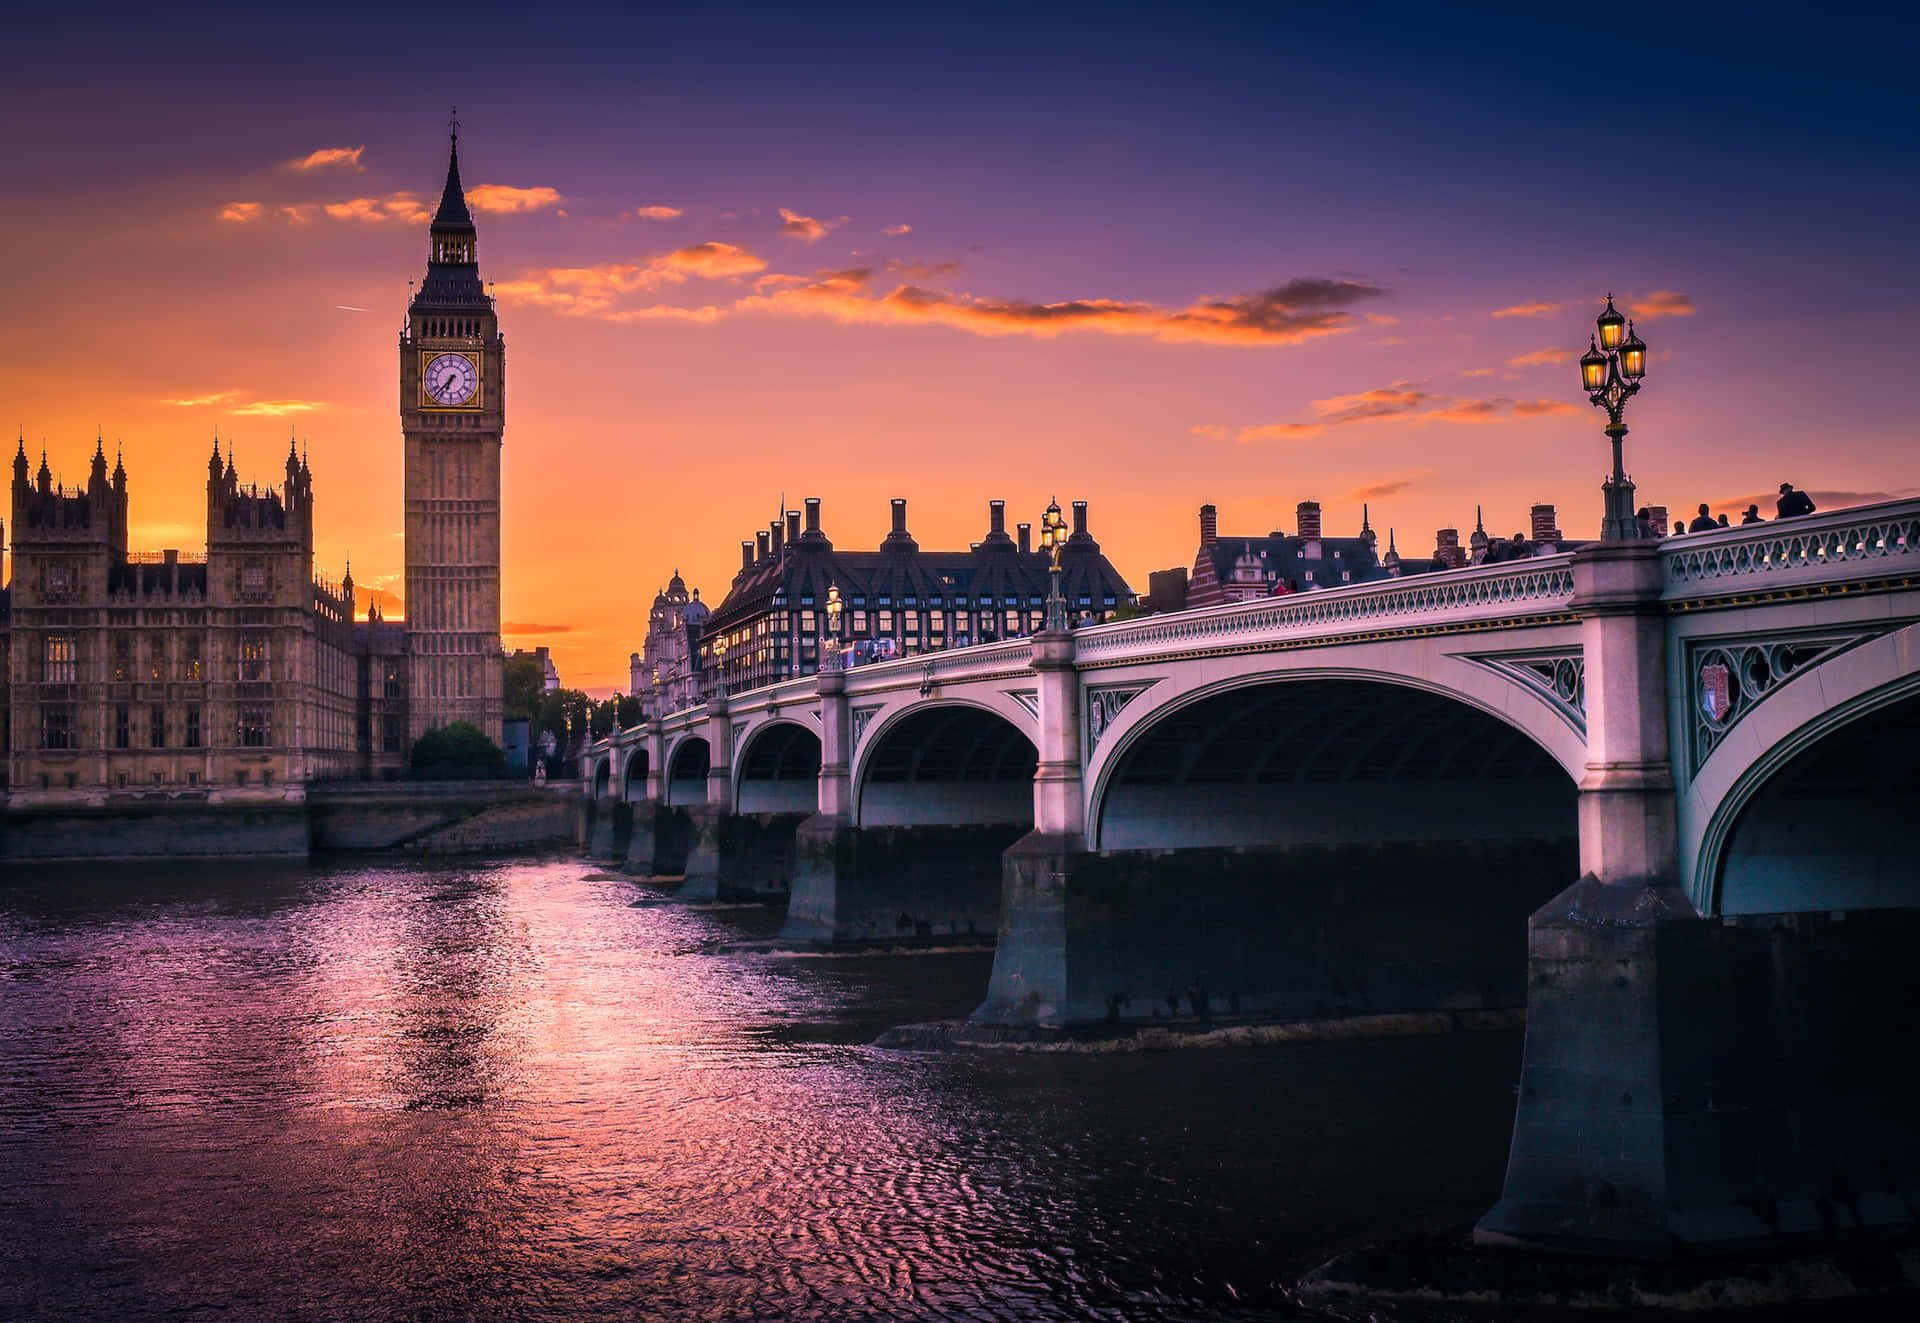 London, the capital city of the United Kingdom